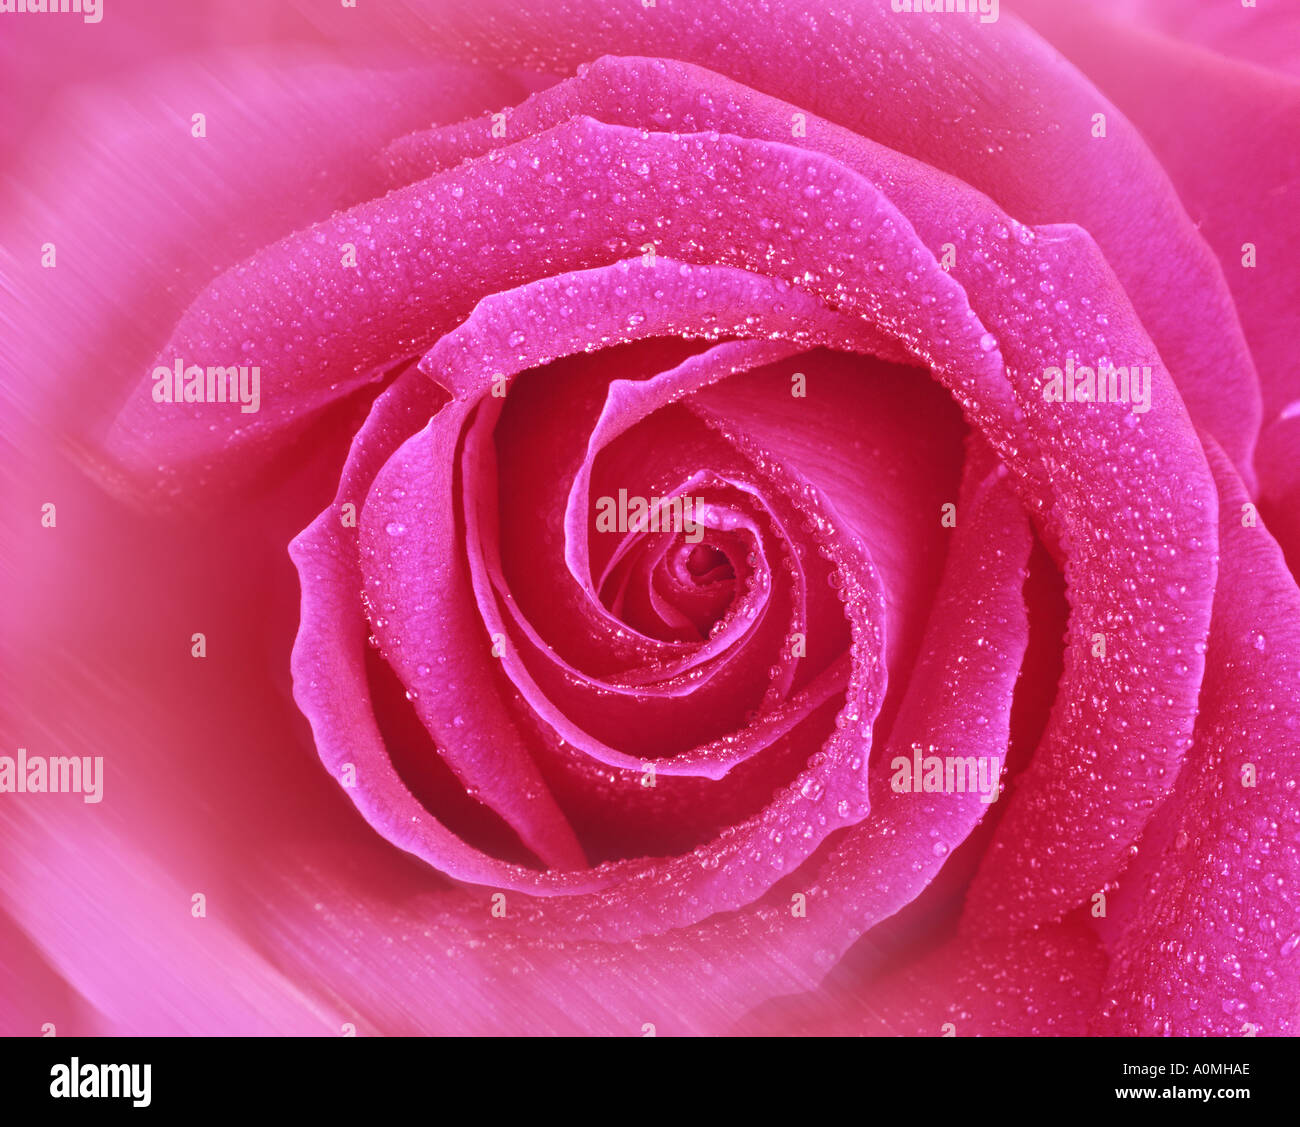 FLORA: inglese Red Rose (lat: rosa handel) Foto Stock